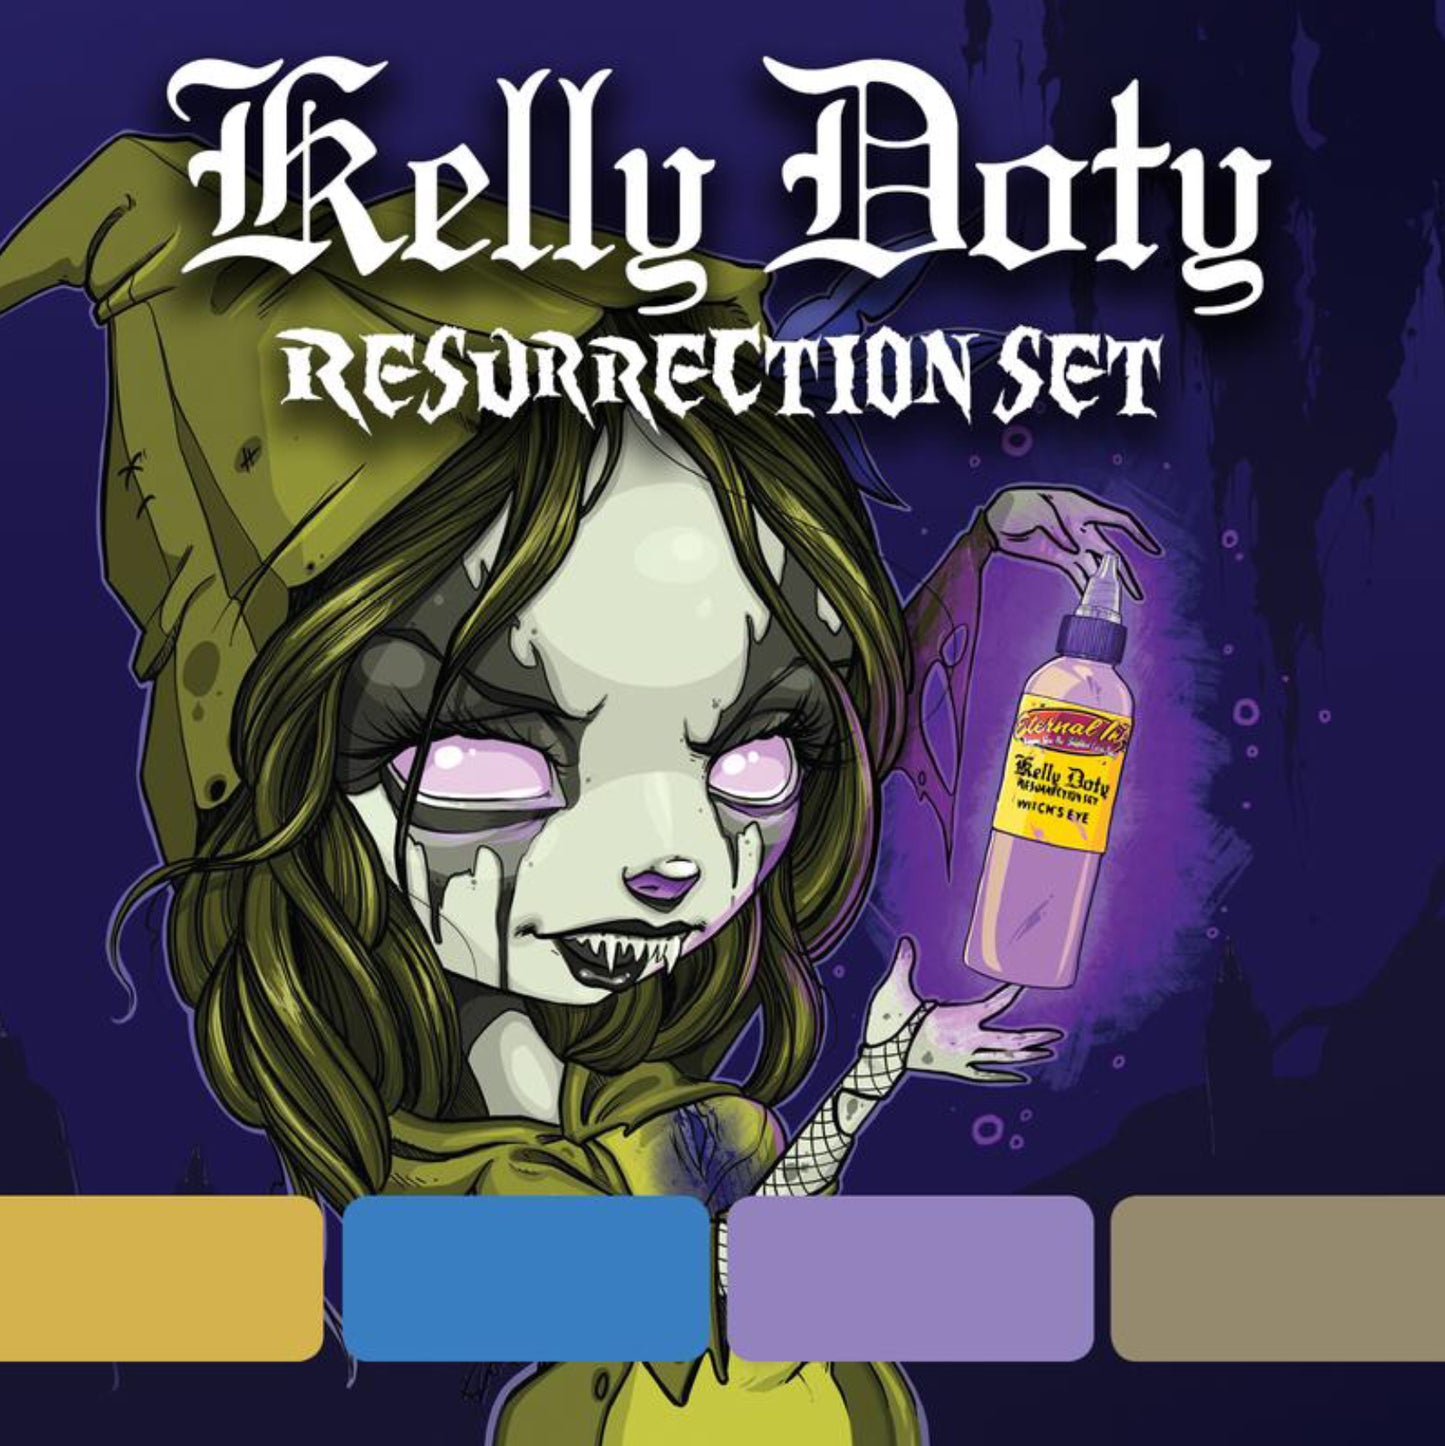 Kelly Doty Set